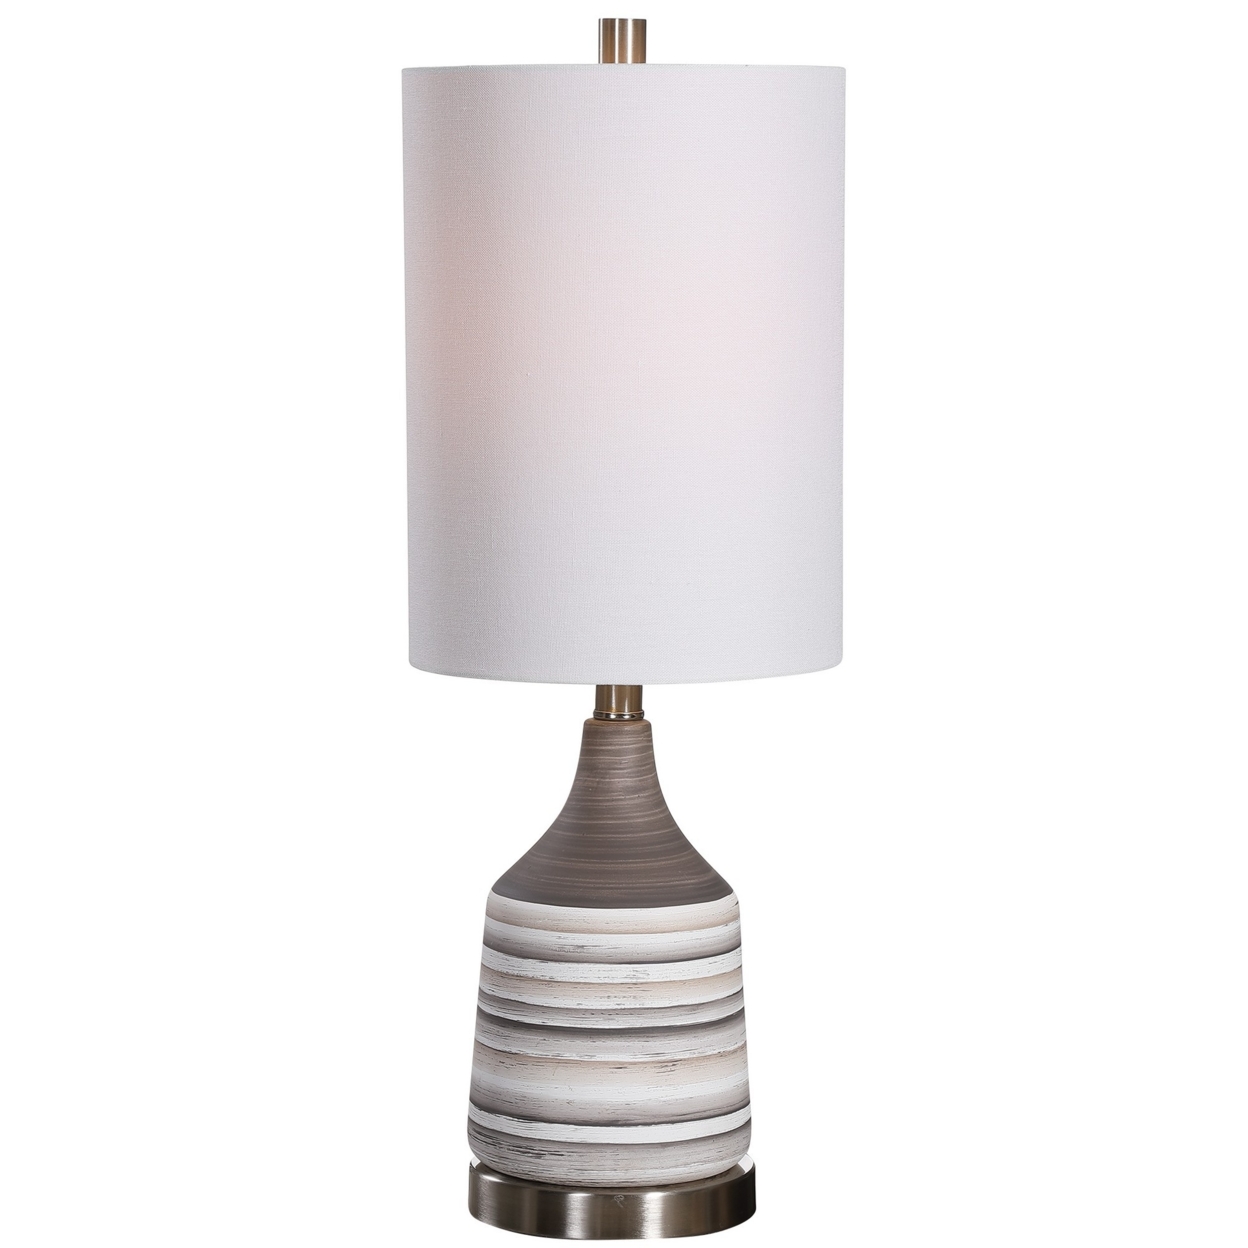 Jar Shaped Ceramic Table Lamp With Stripes, Gray- Saltoro Sherpi